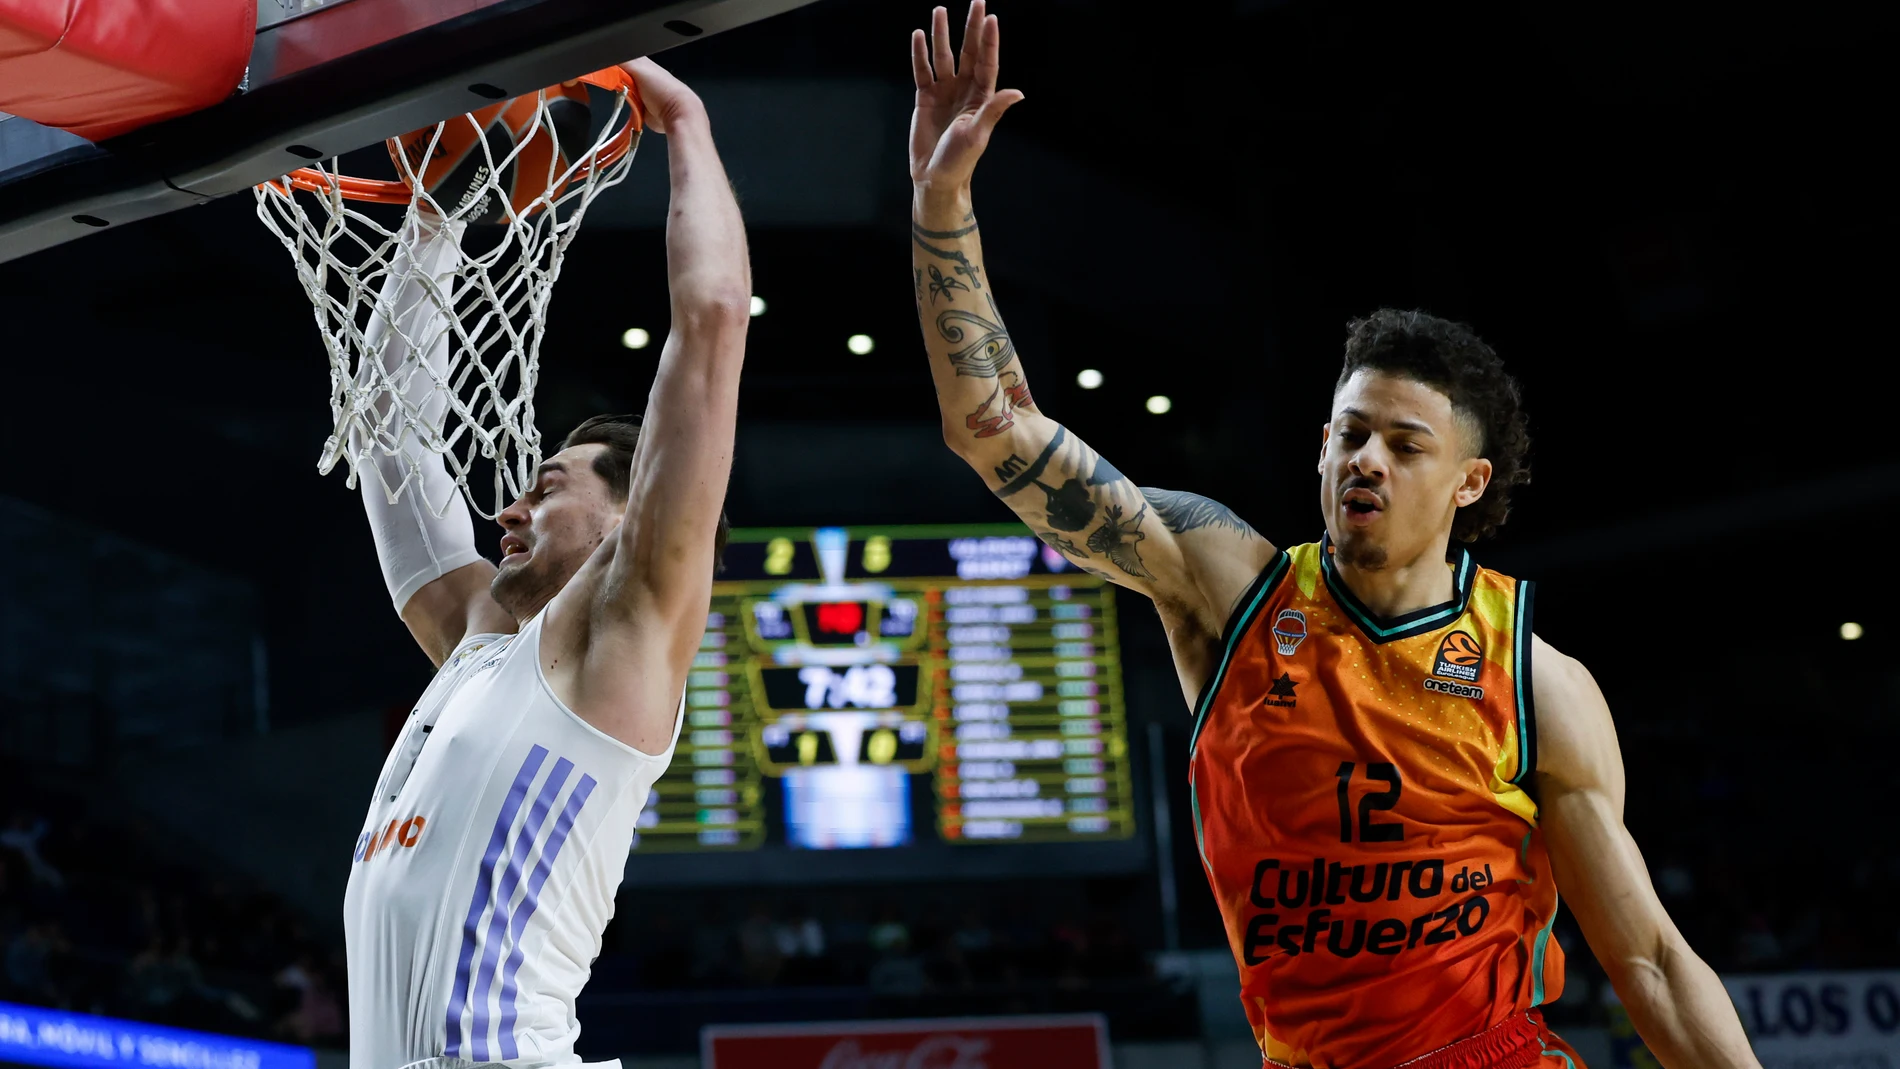 Hezonja anota dos puntos ante el Valencia Basket